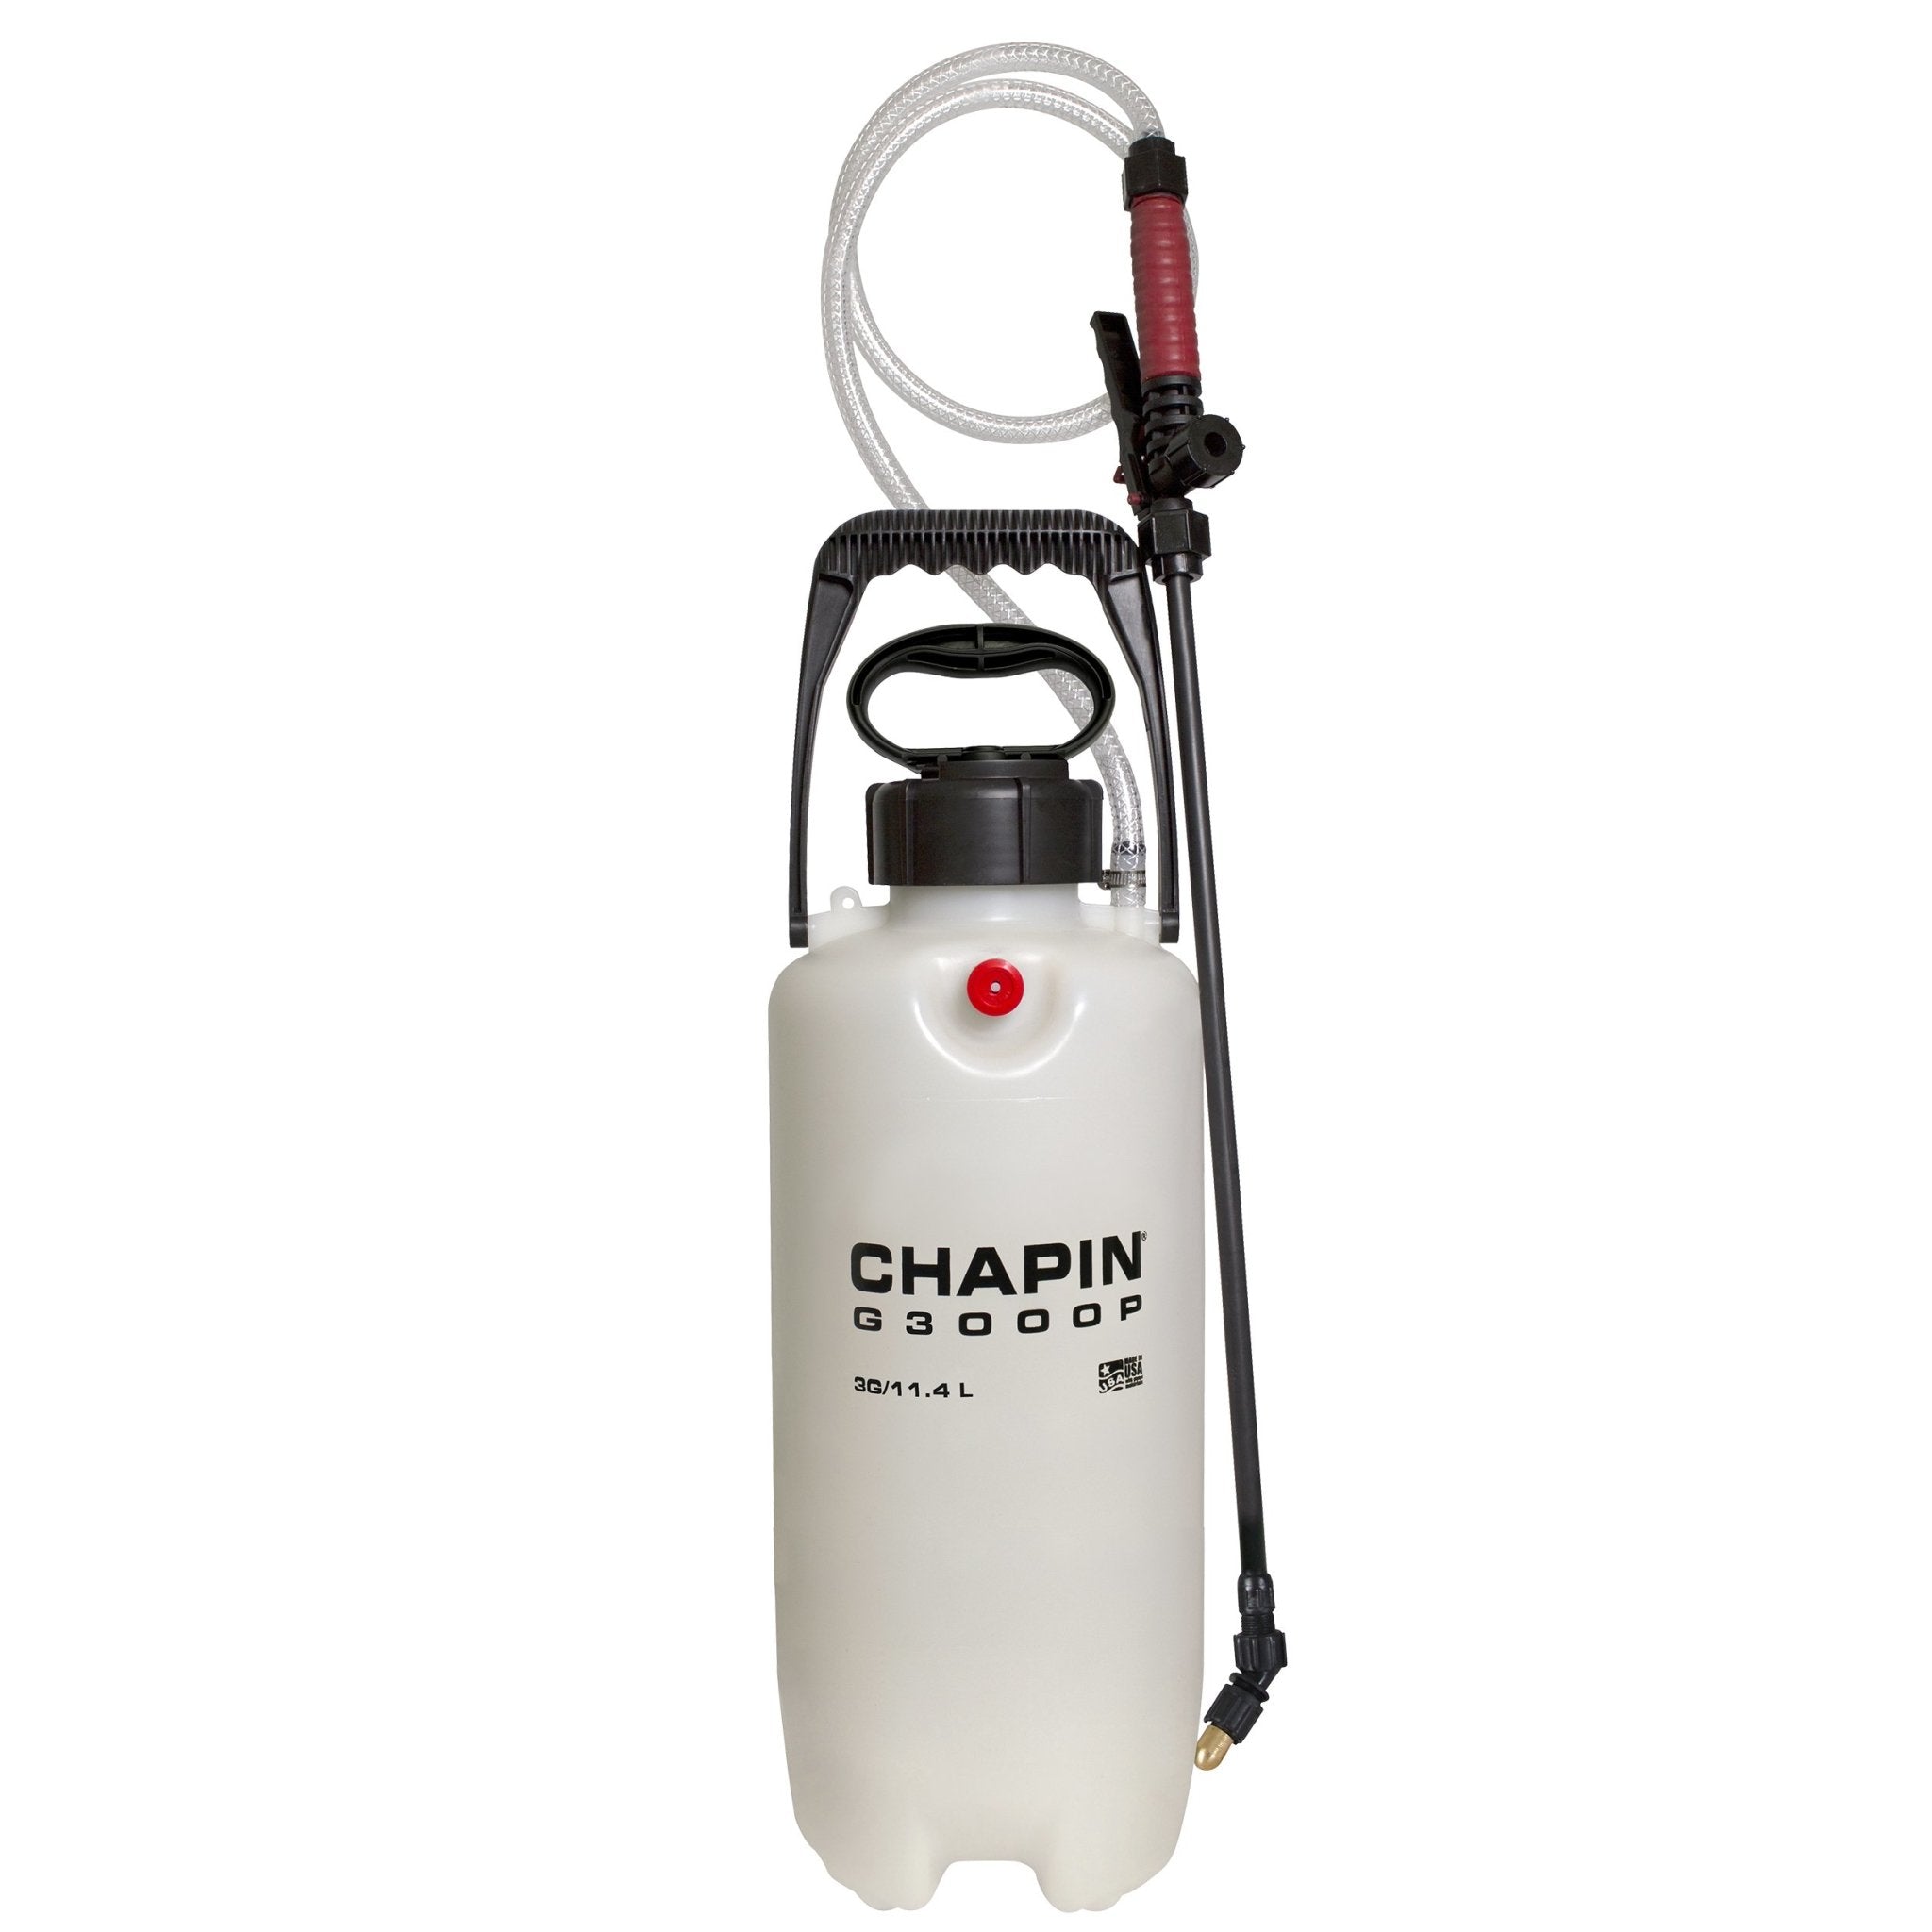 Chapin G3000P FKM Seal Sprayer, 11.2 litres